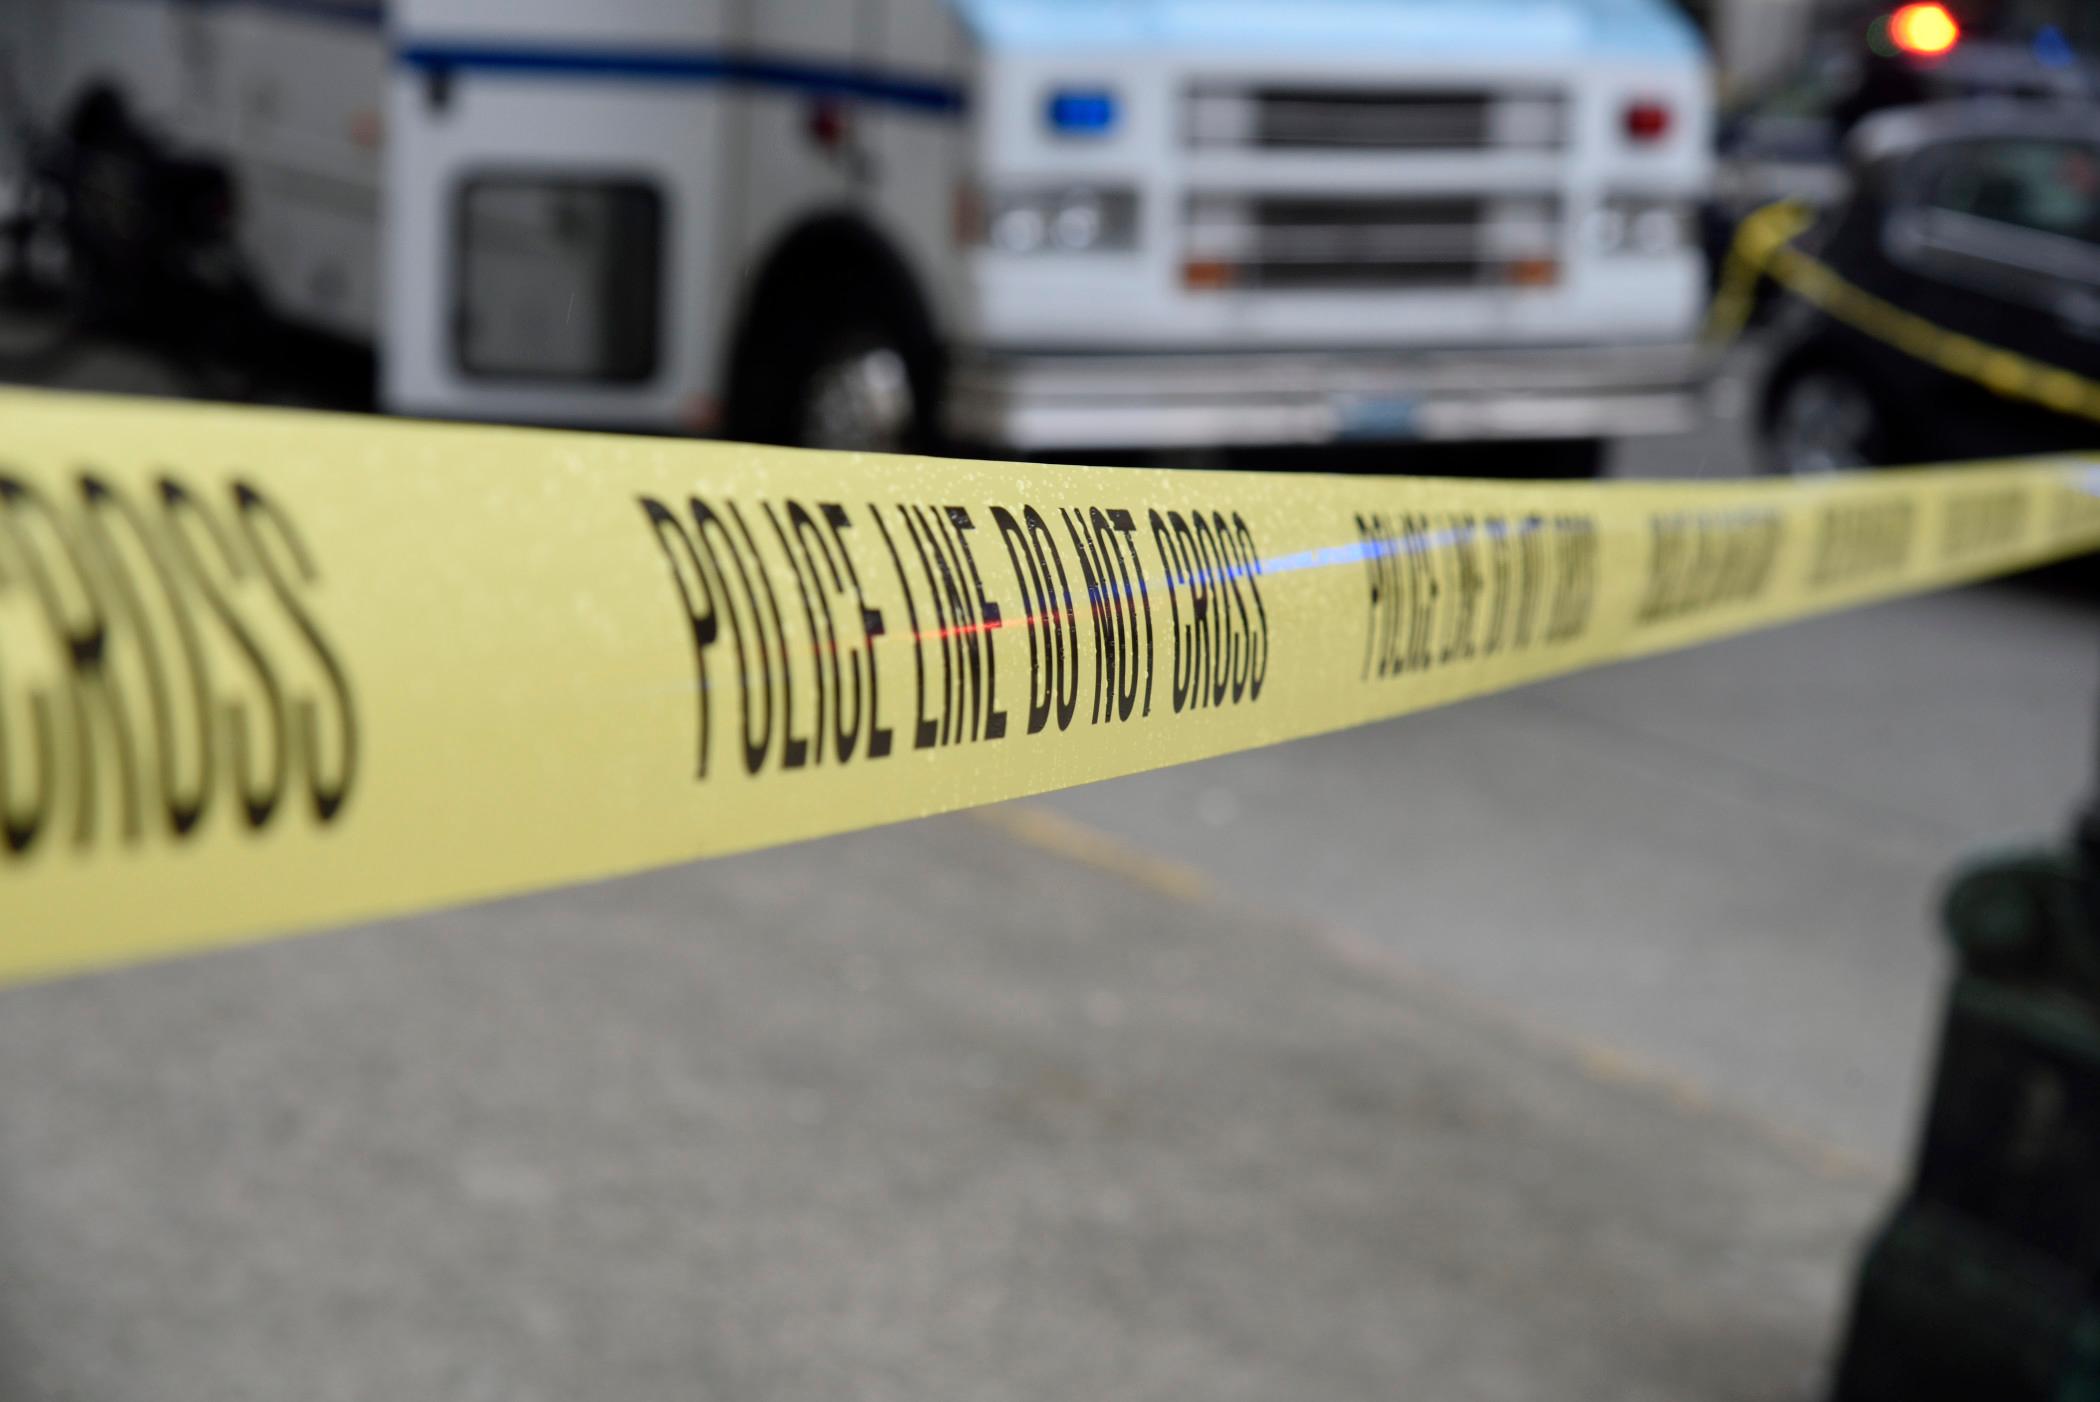 A Spokane, Washington woman was recently shot in a road rage incident.